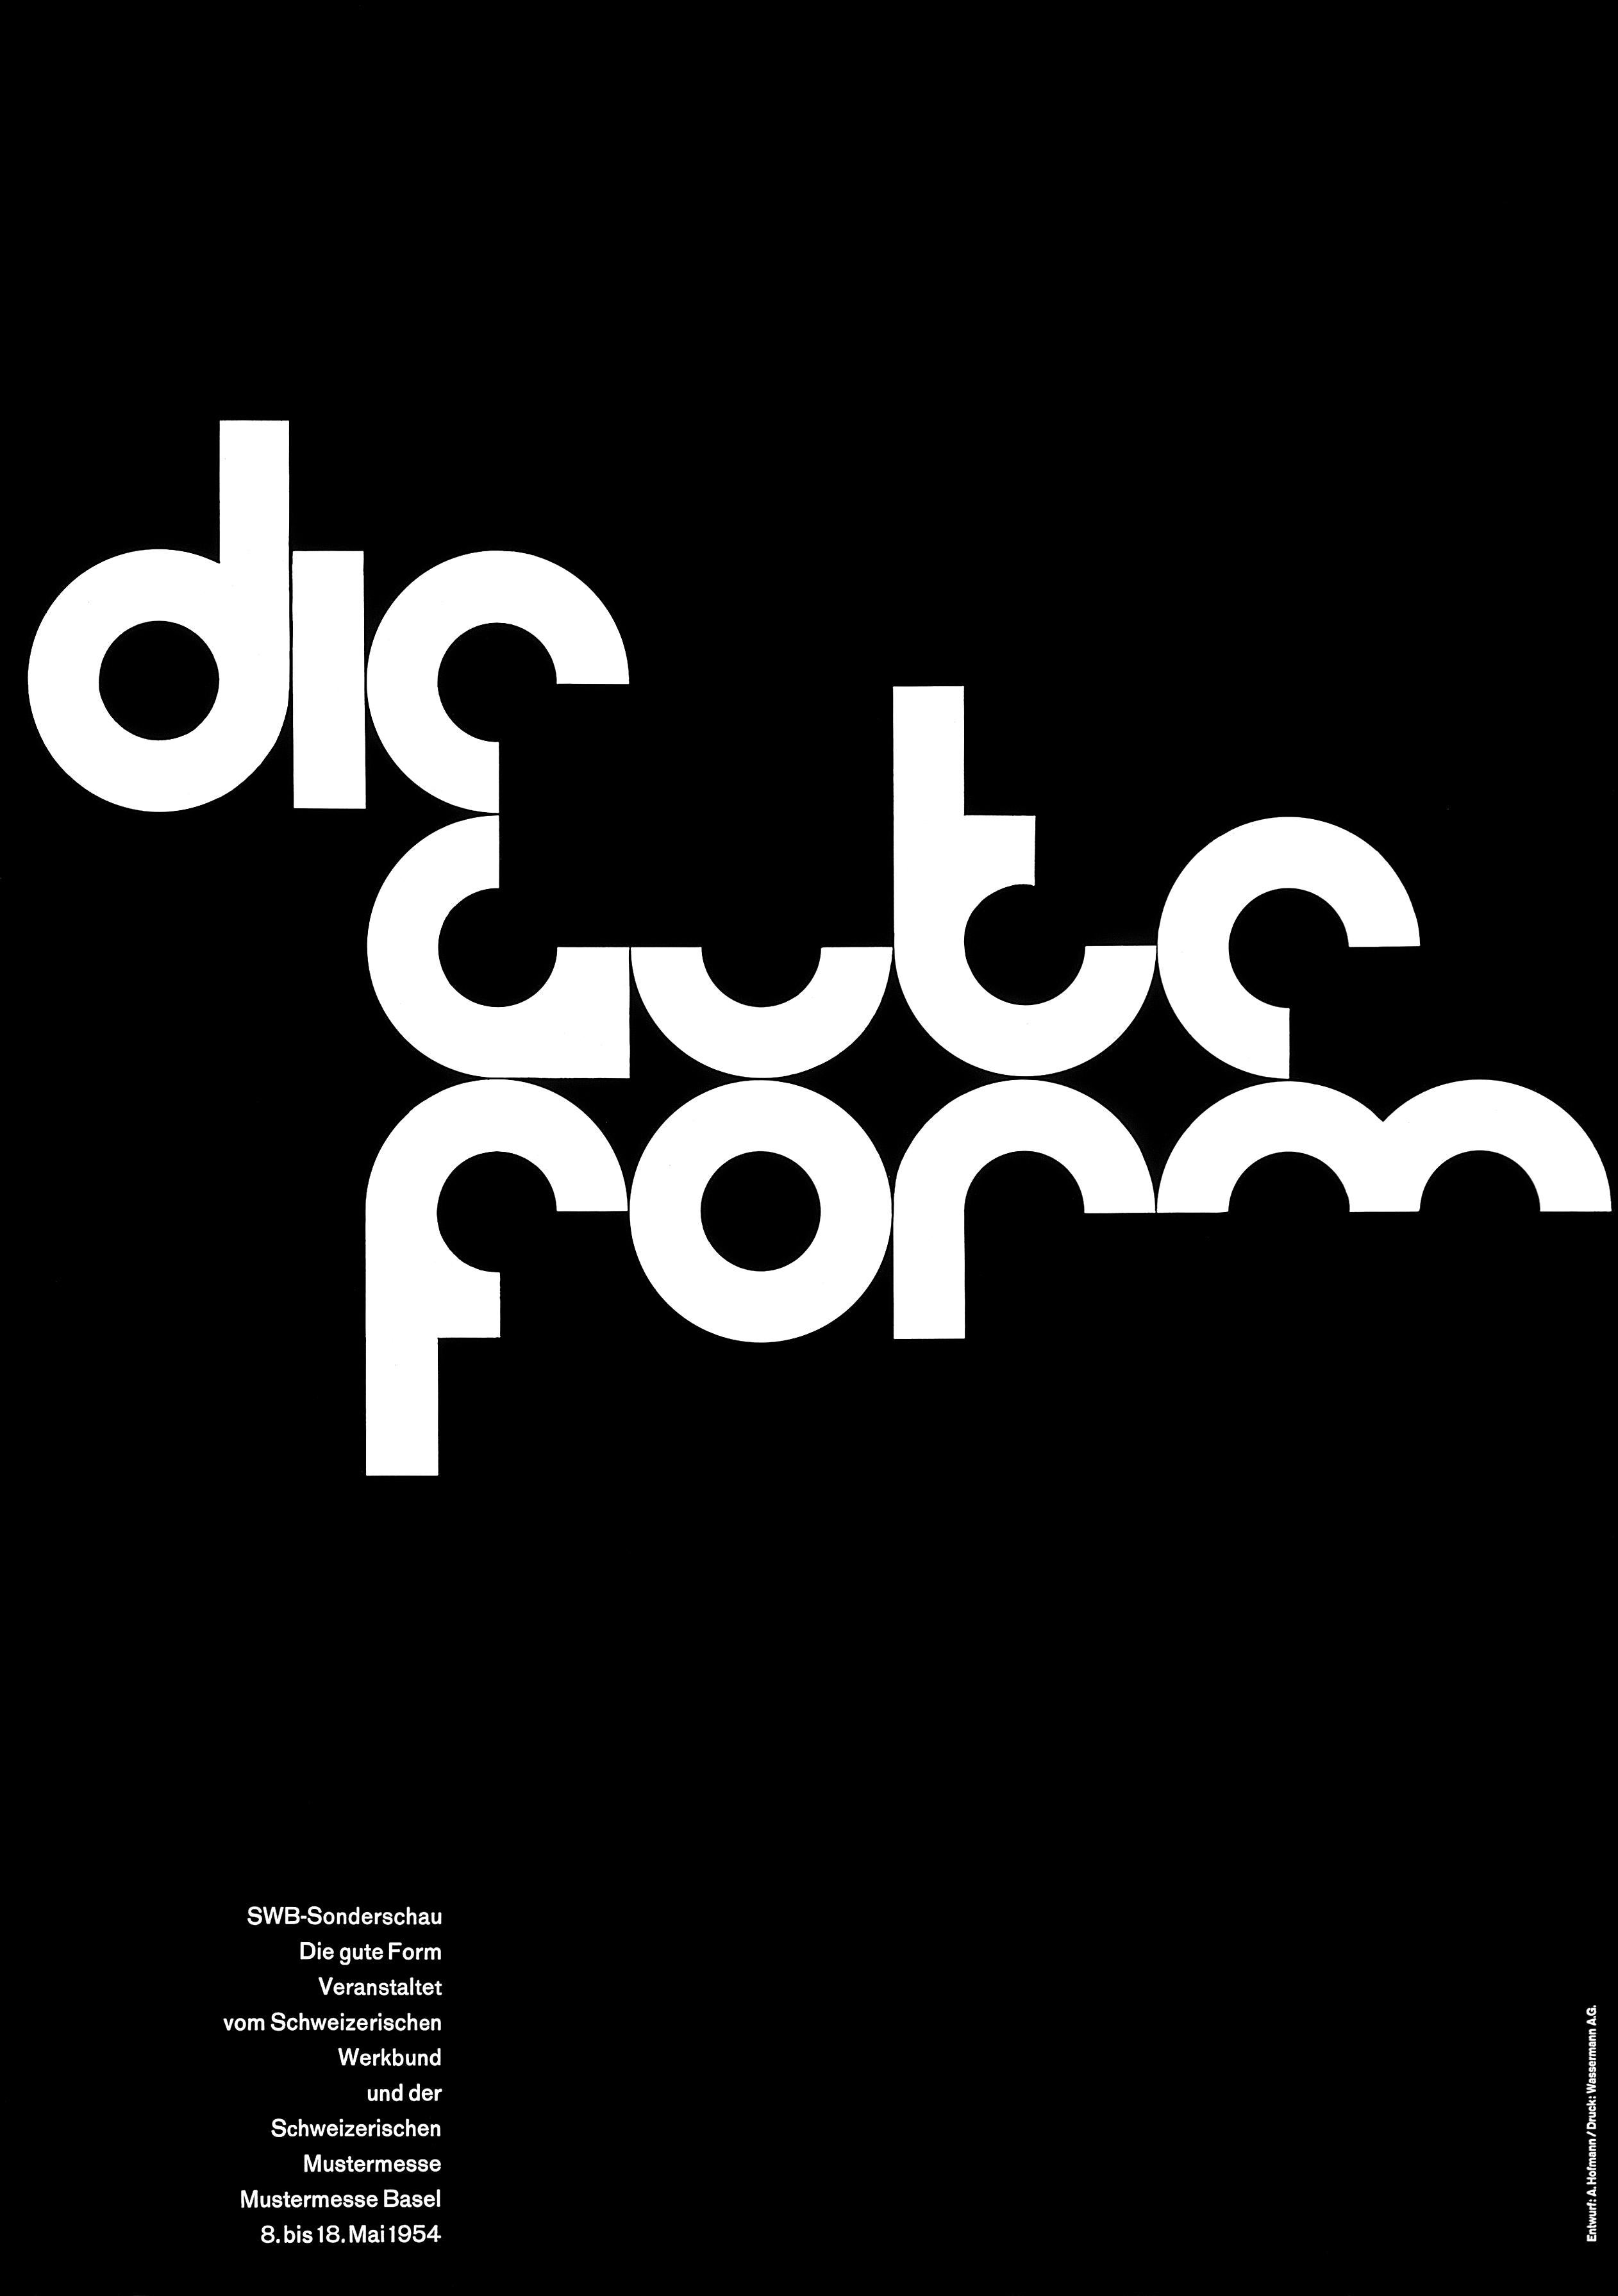 "Die Gute Form" Hofmann Mid-Century Swiss Graphic Design Original Vintage Poster - Print by Armin Hofmann